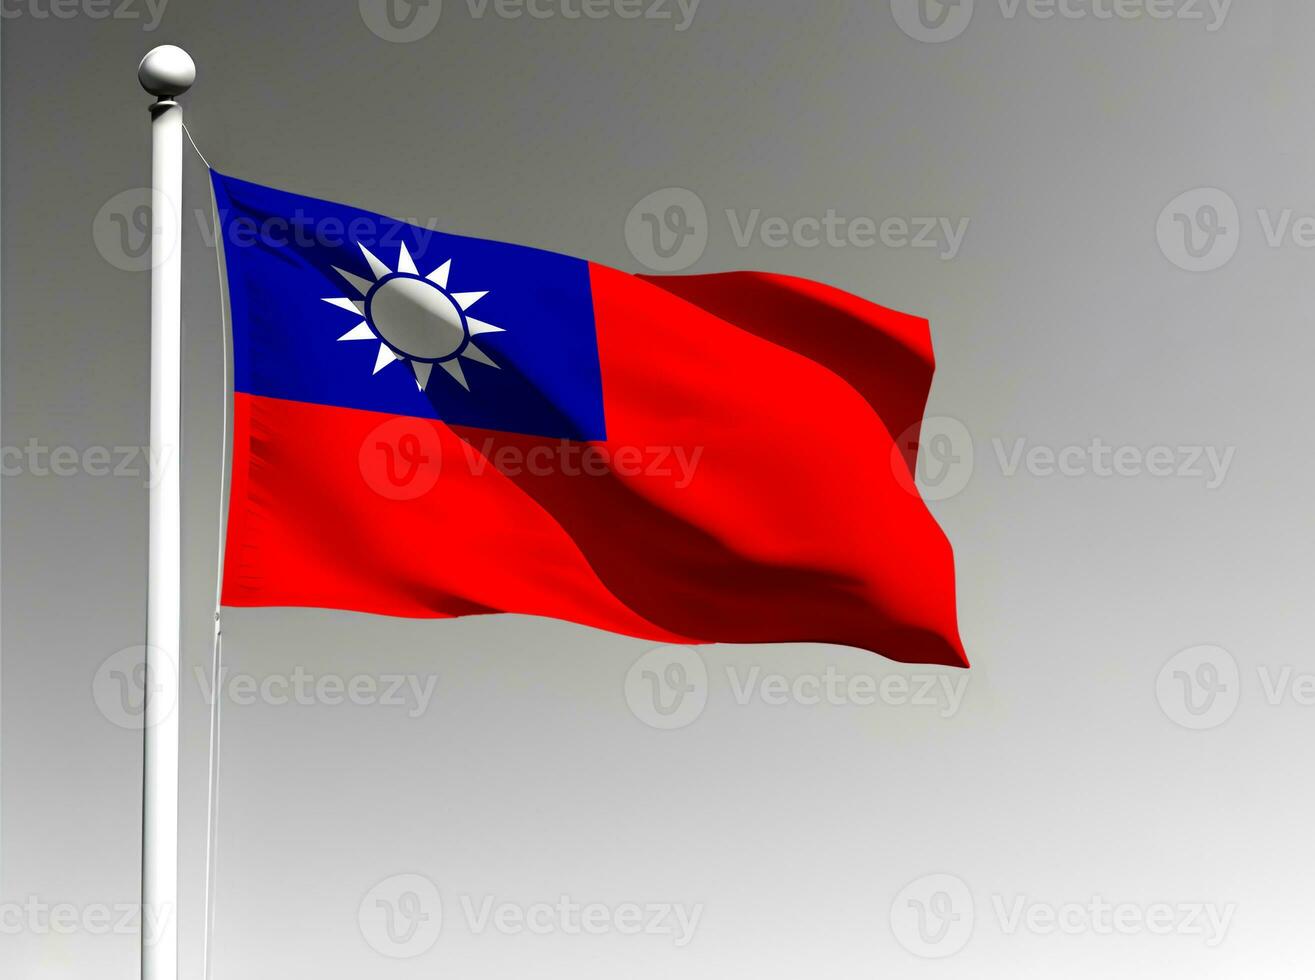 Taiwan national flag waving on gray background photo